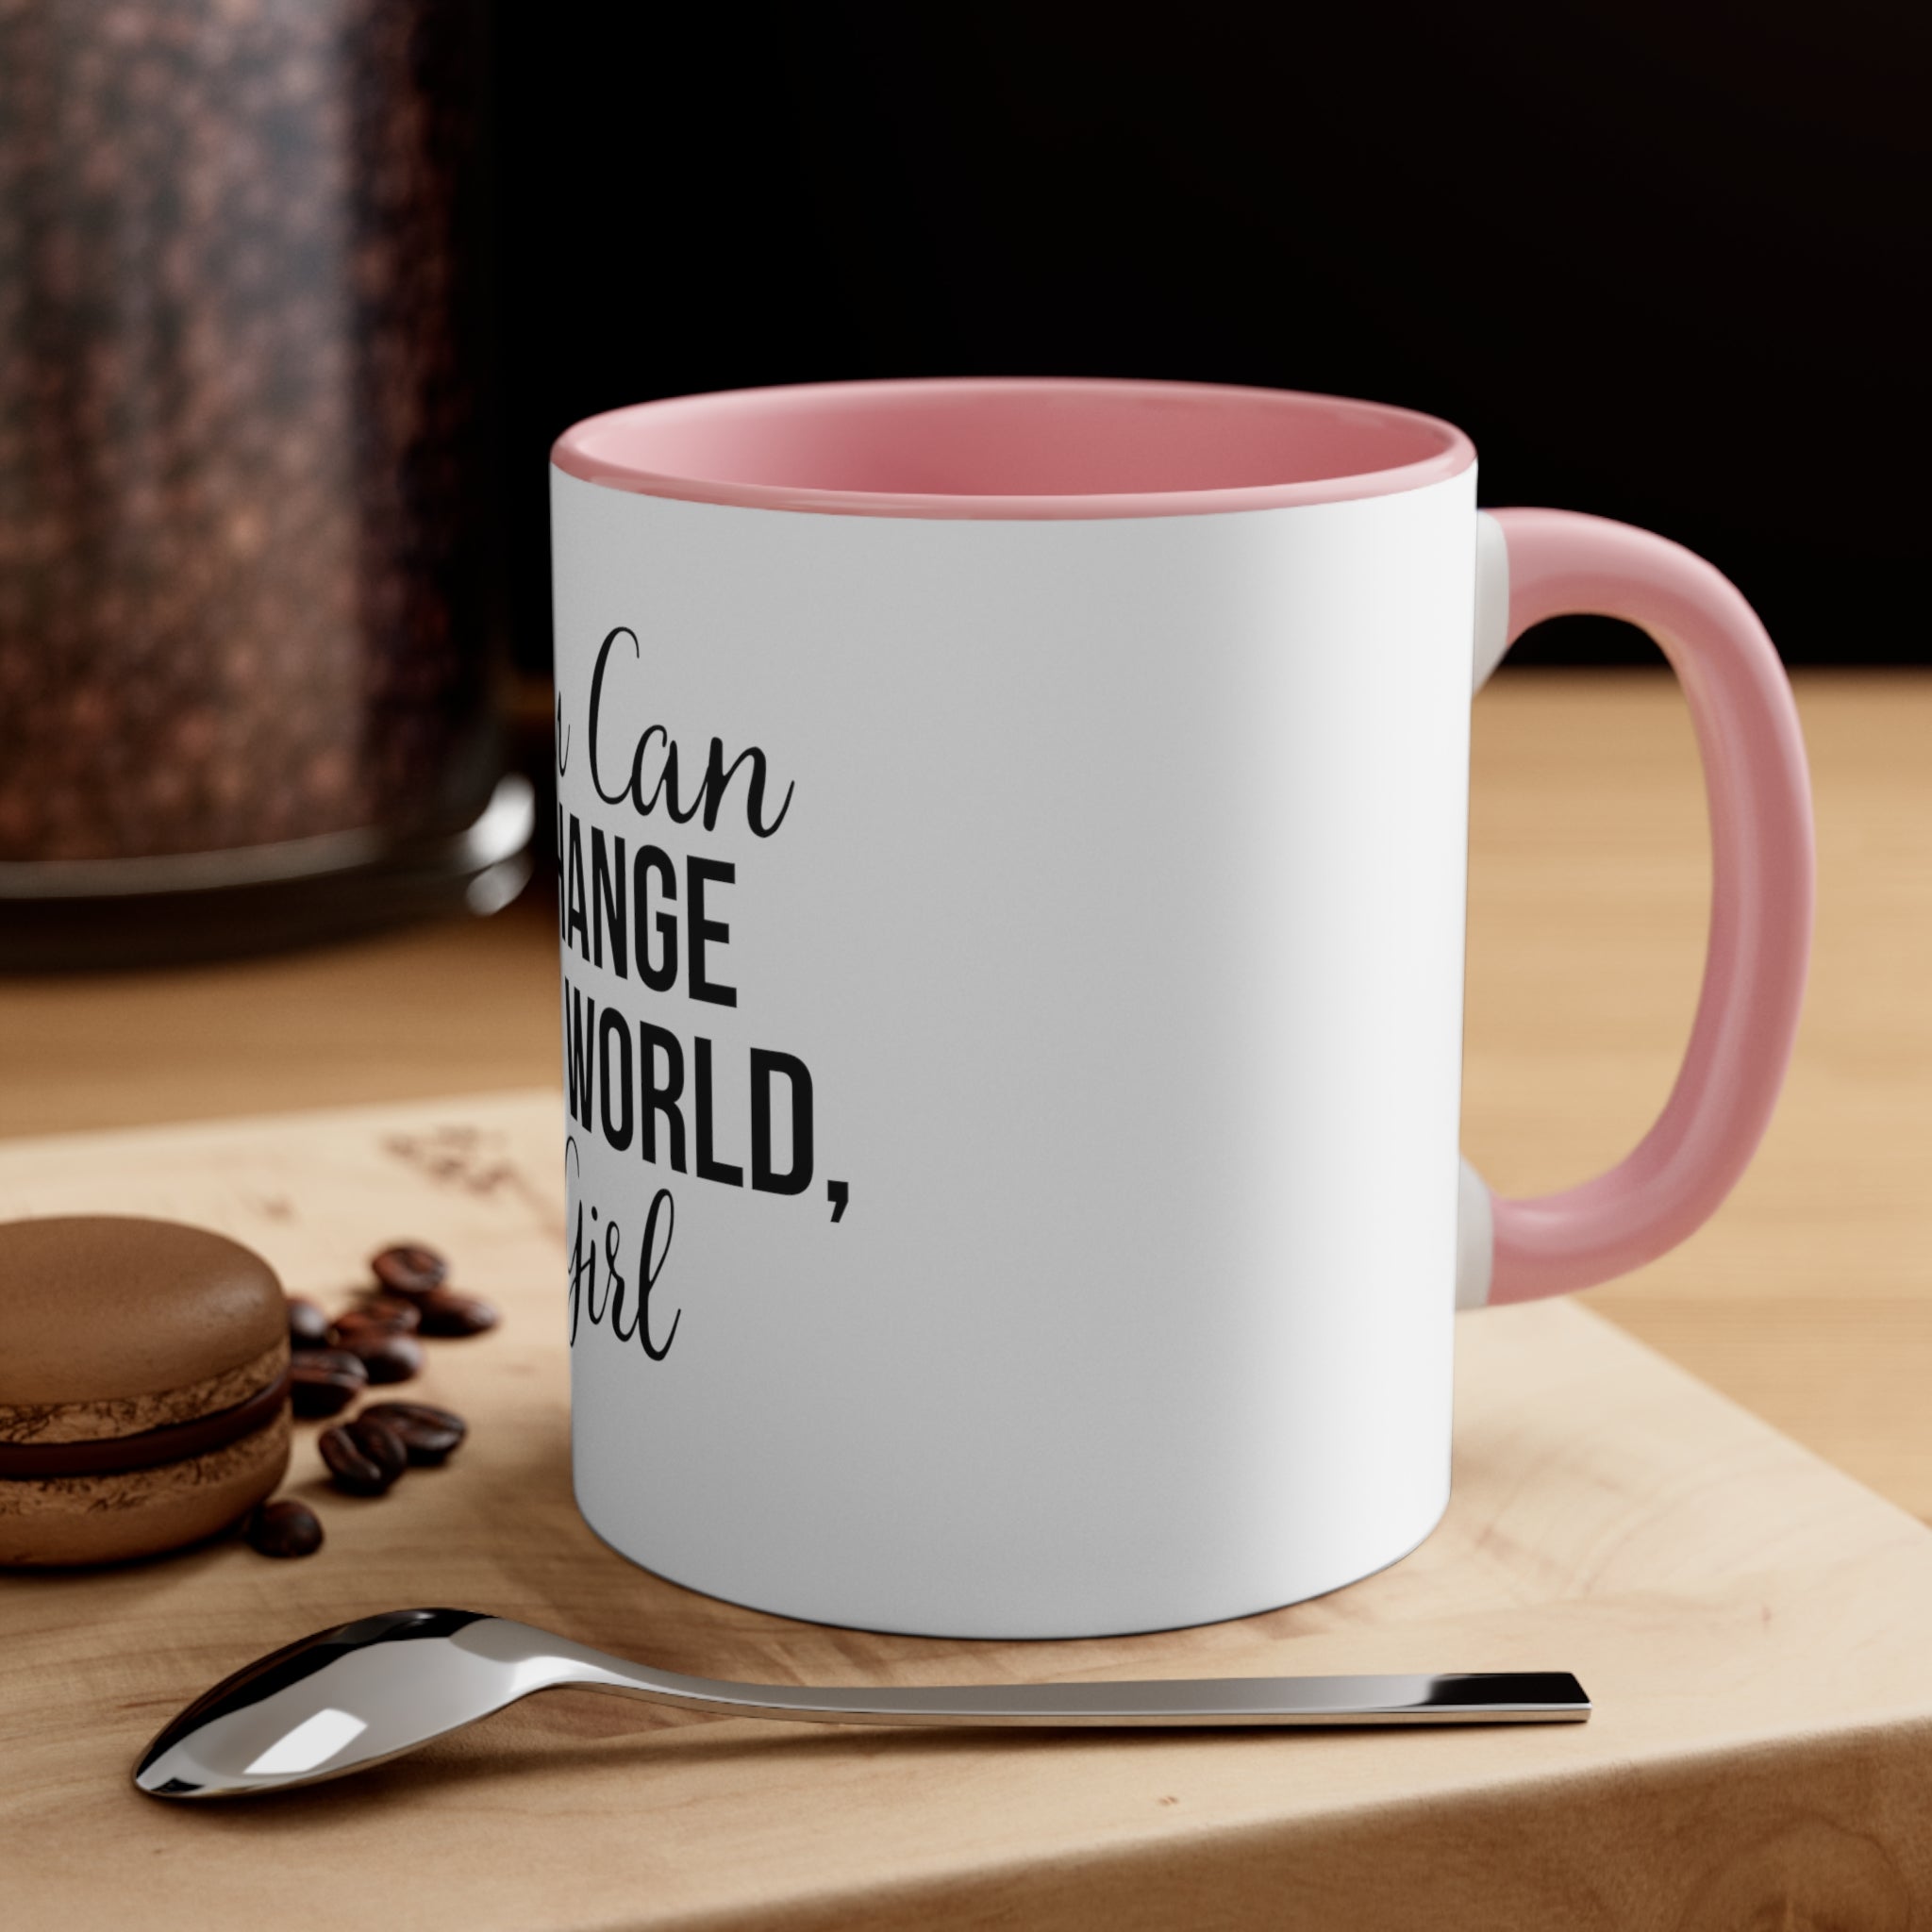 You Can Change The World Girl Accent Coffee Mug, 11oz